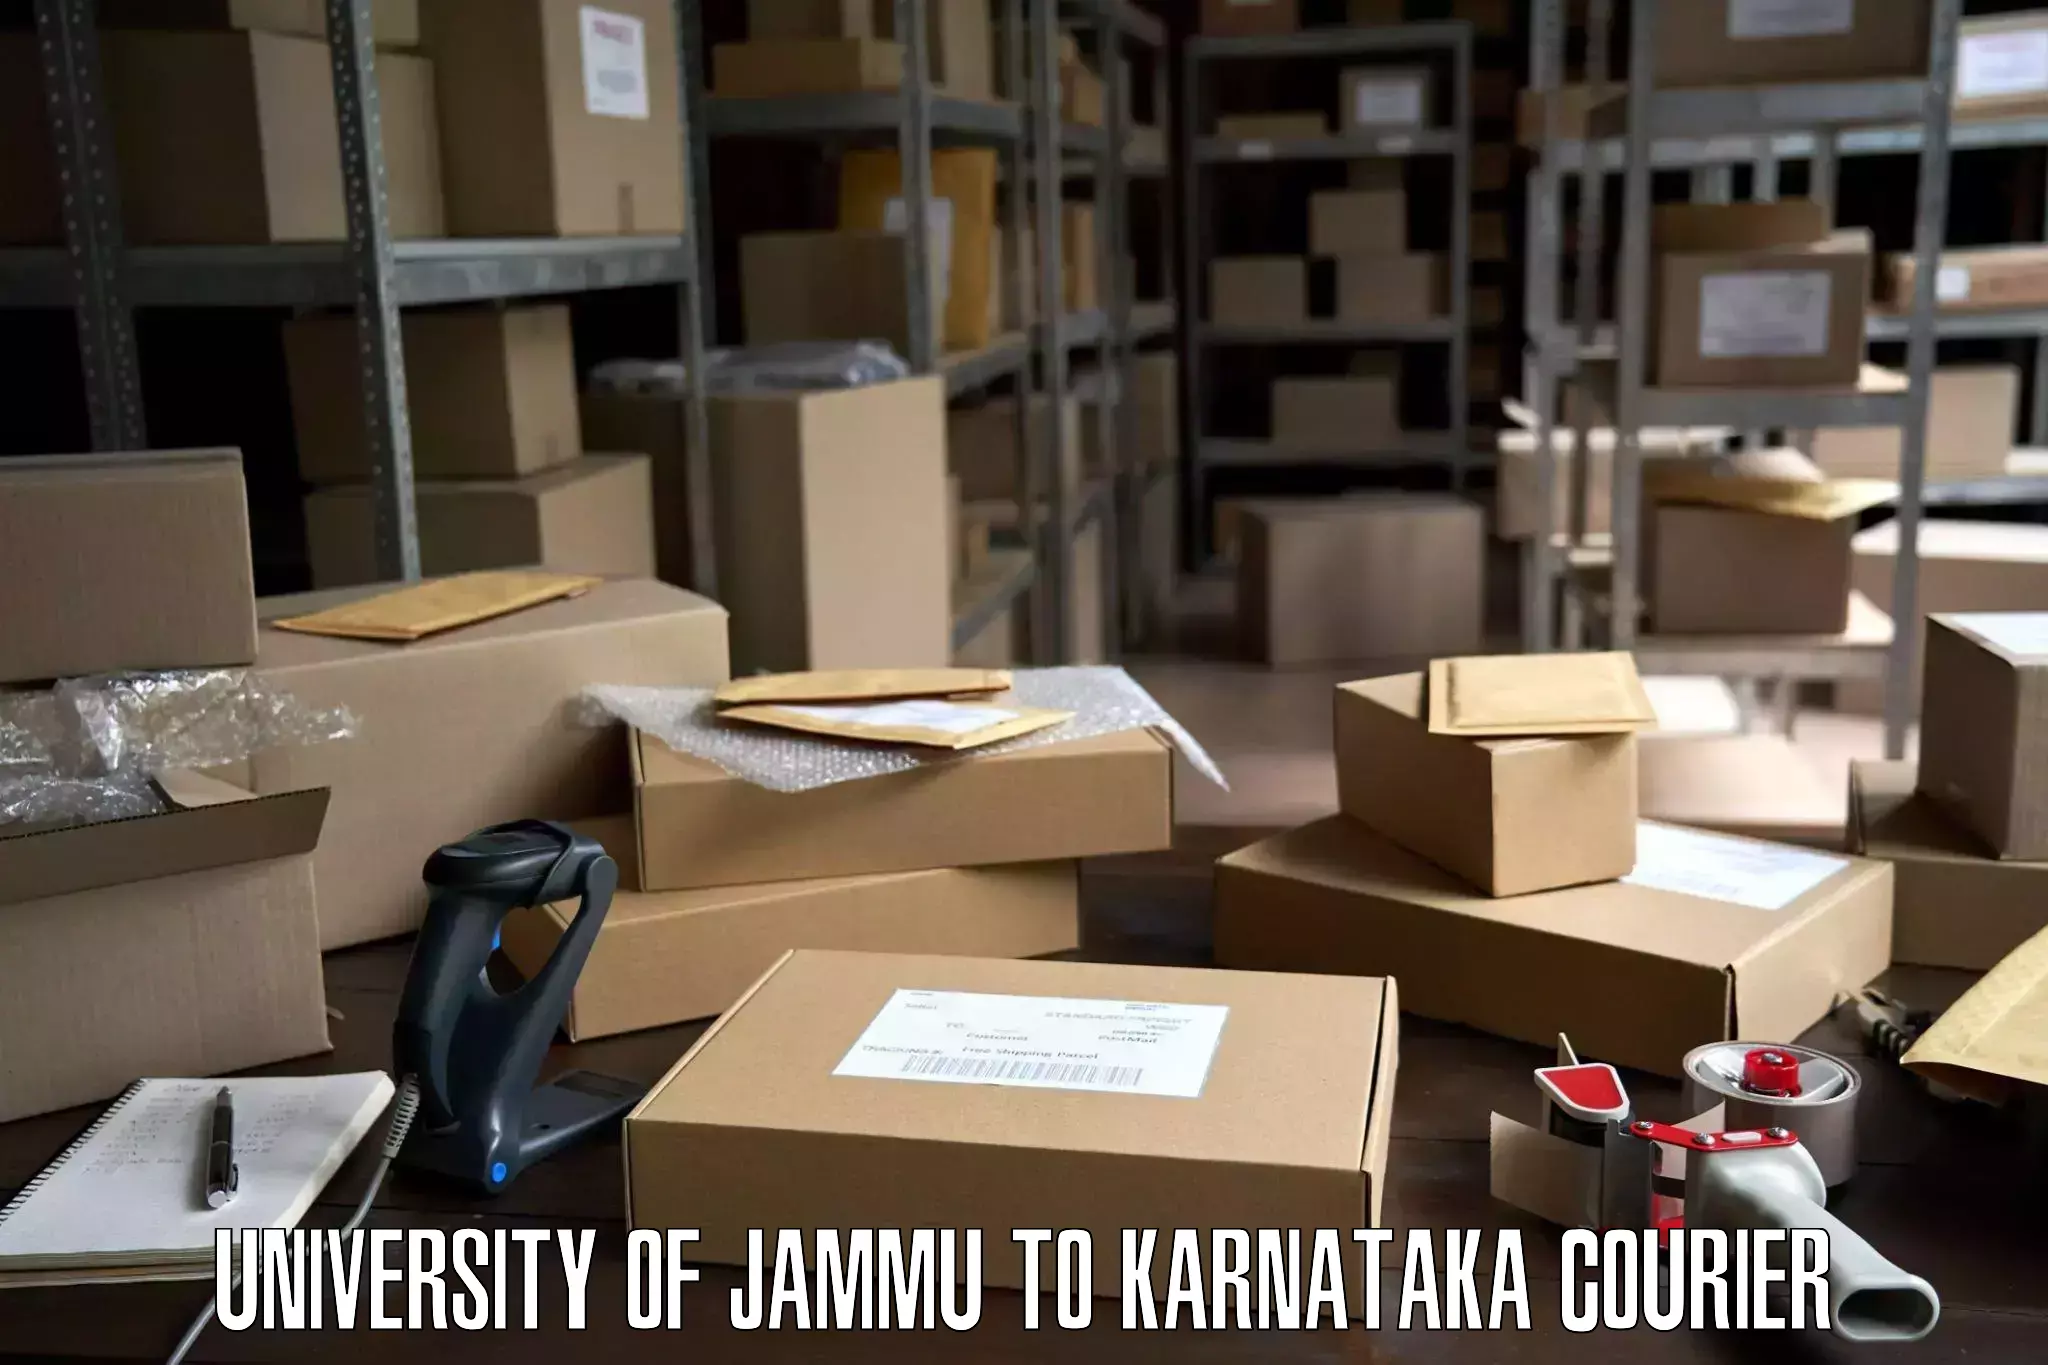 Professional movers and packers University of Jammu to Karnataka